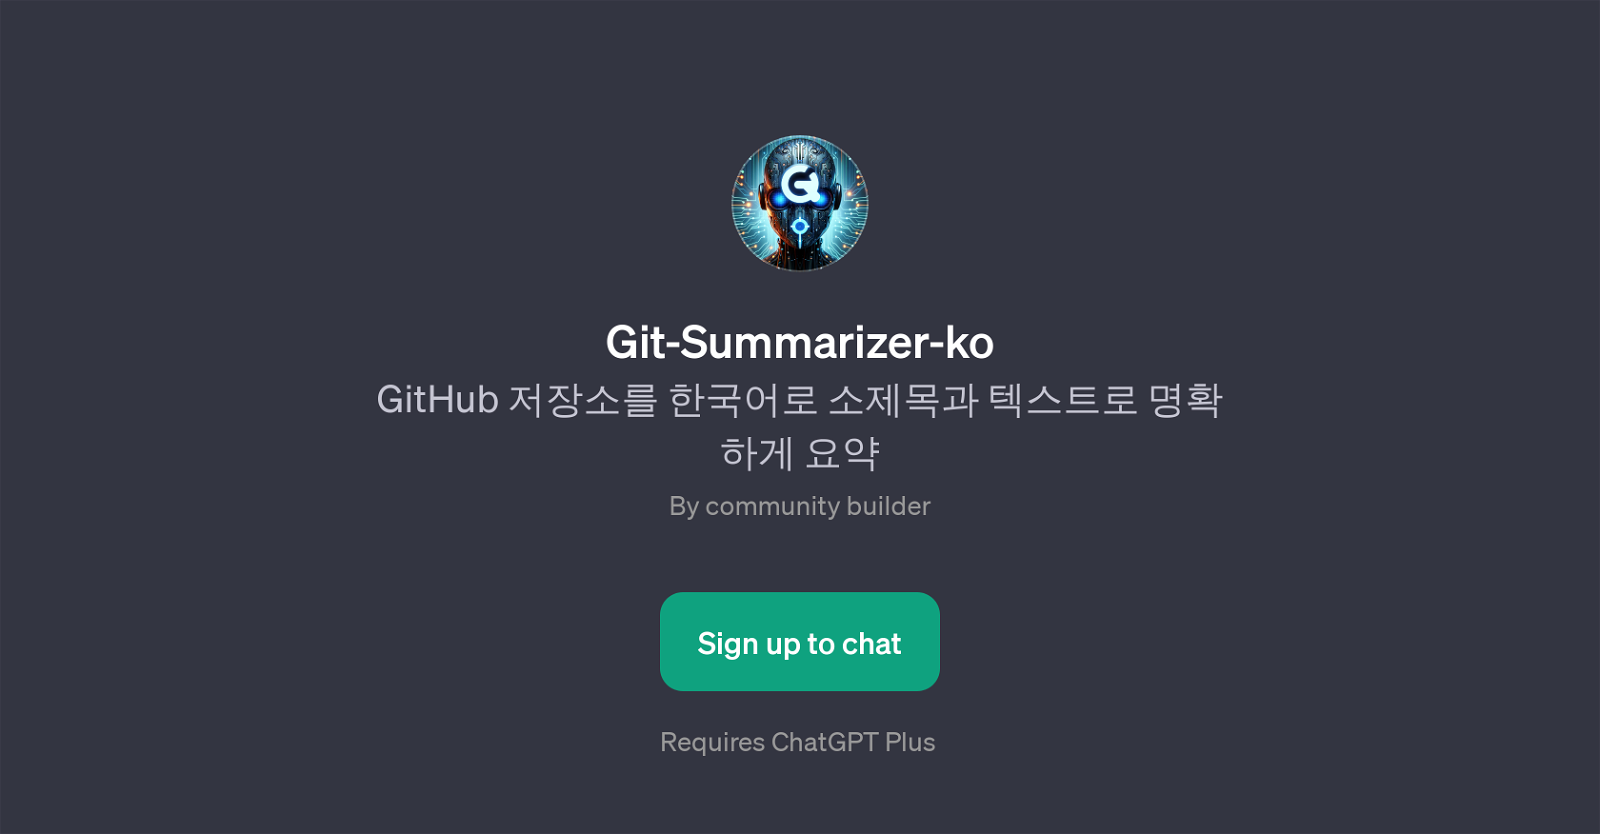 Git-Summarizer-ko website